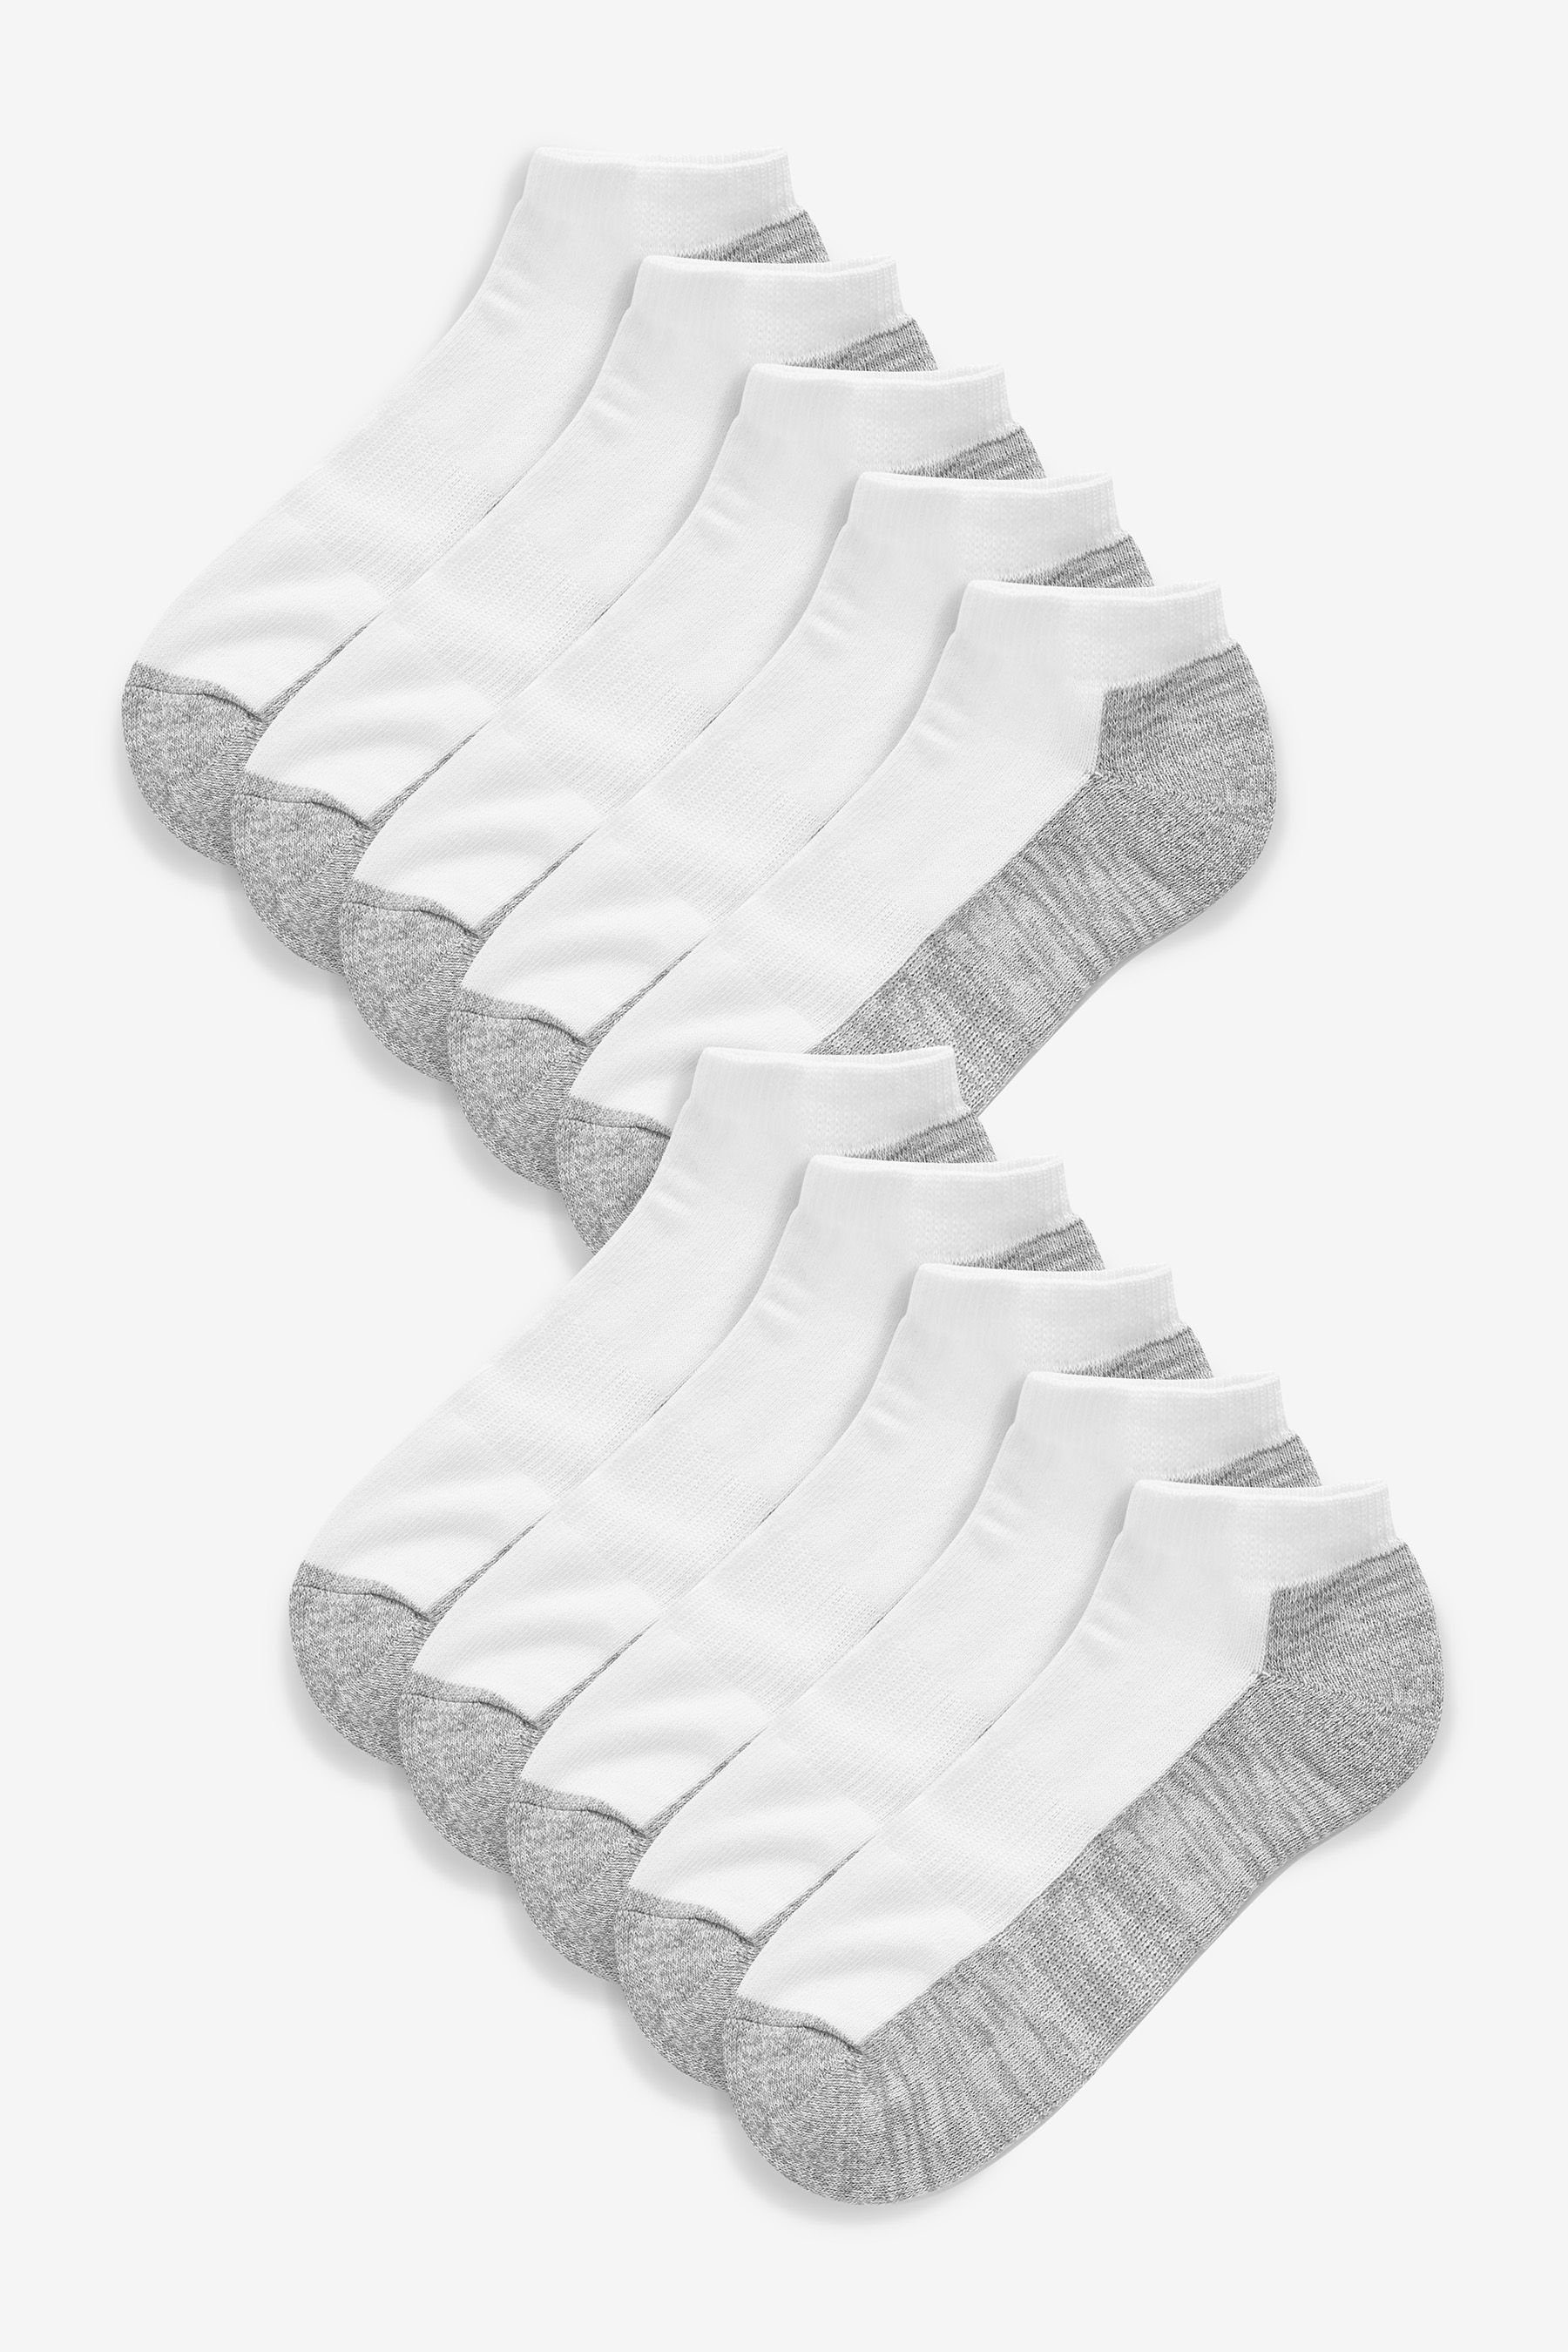 Next (10-Paar) gepolsterter White/Grey 10er-Pack mit Sneaker-Socken Sohle, Sneakersocken